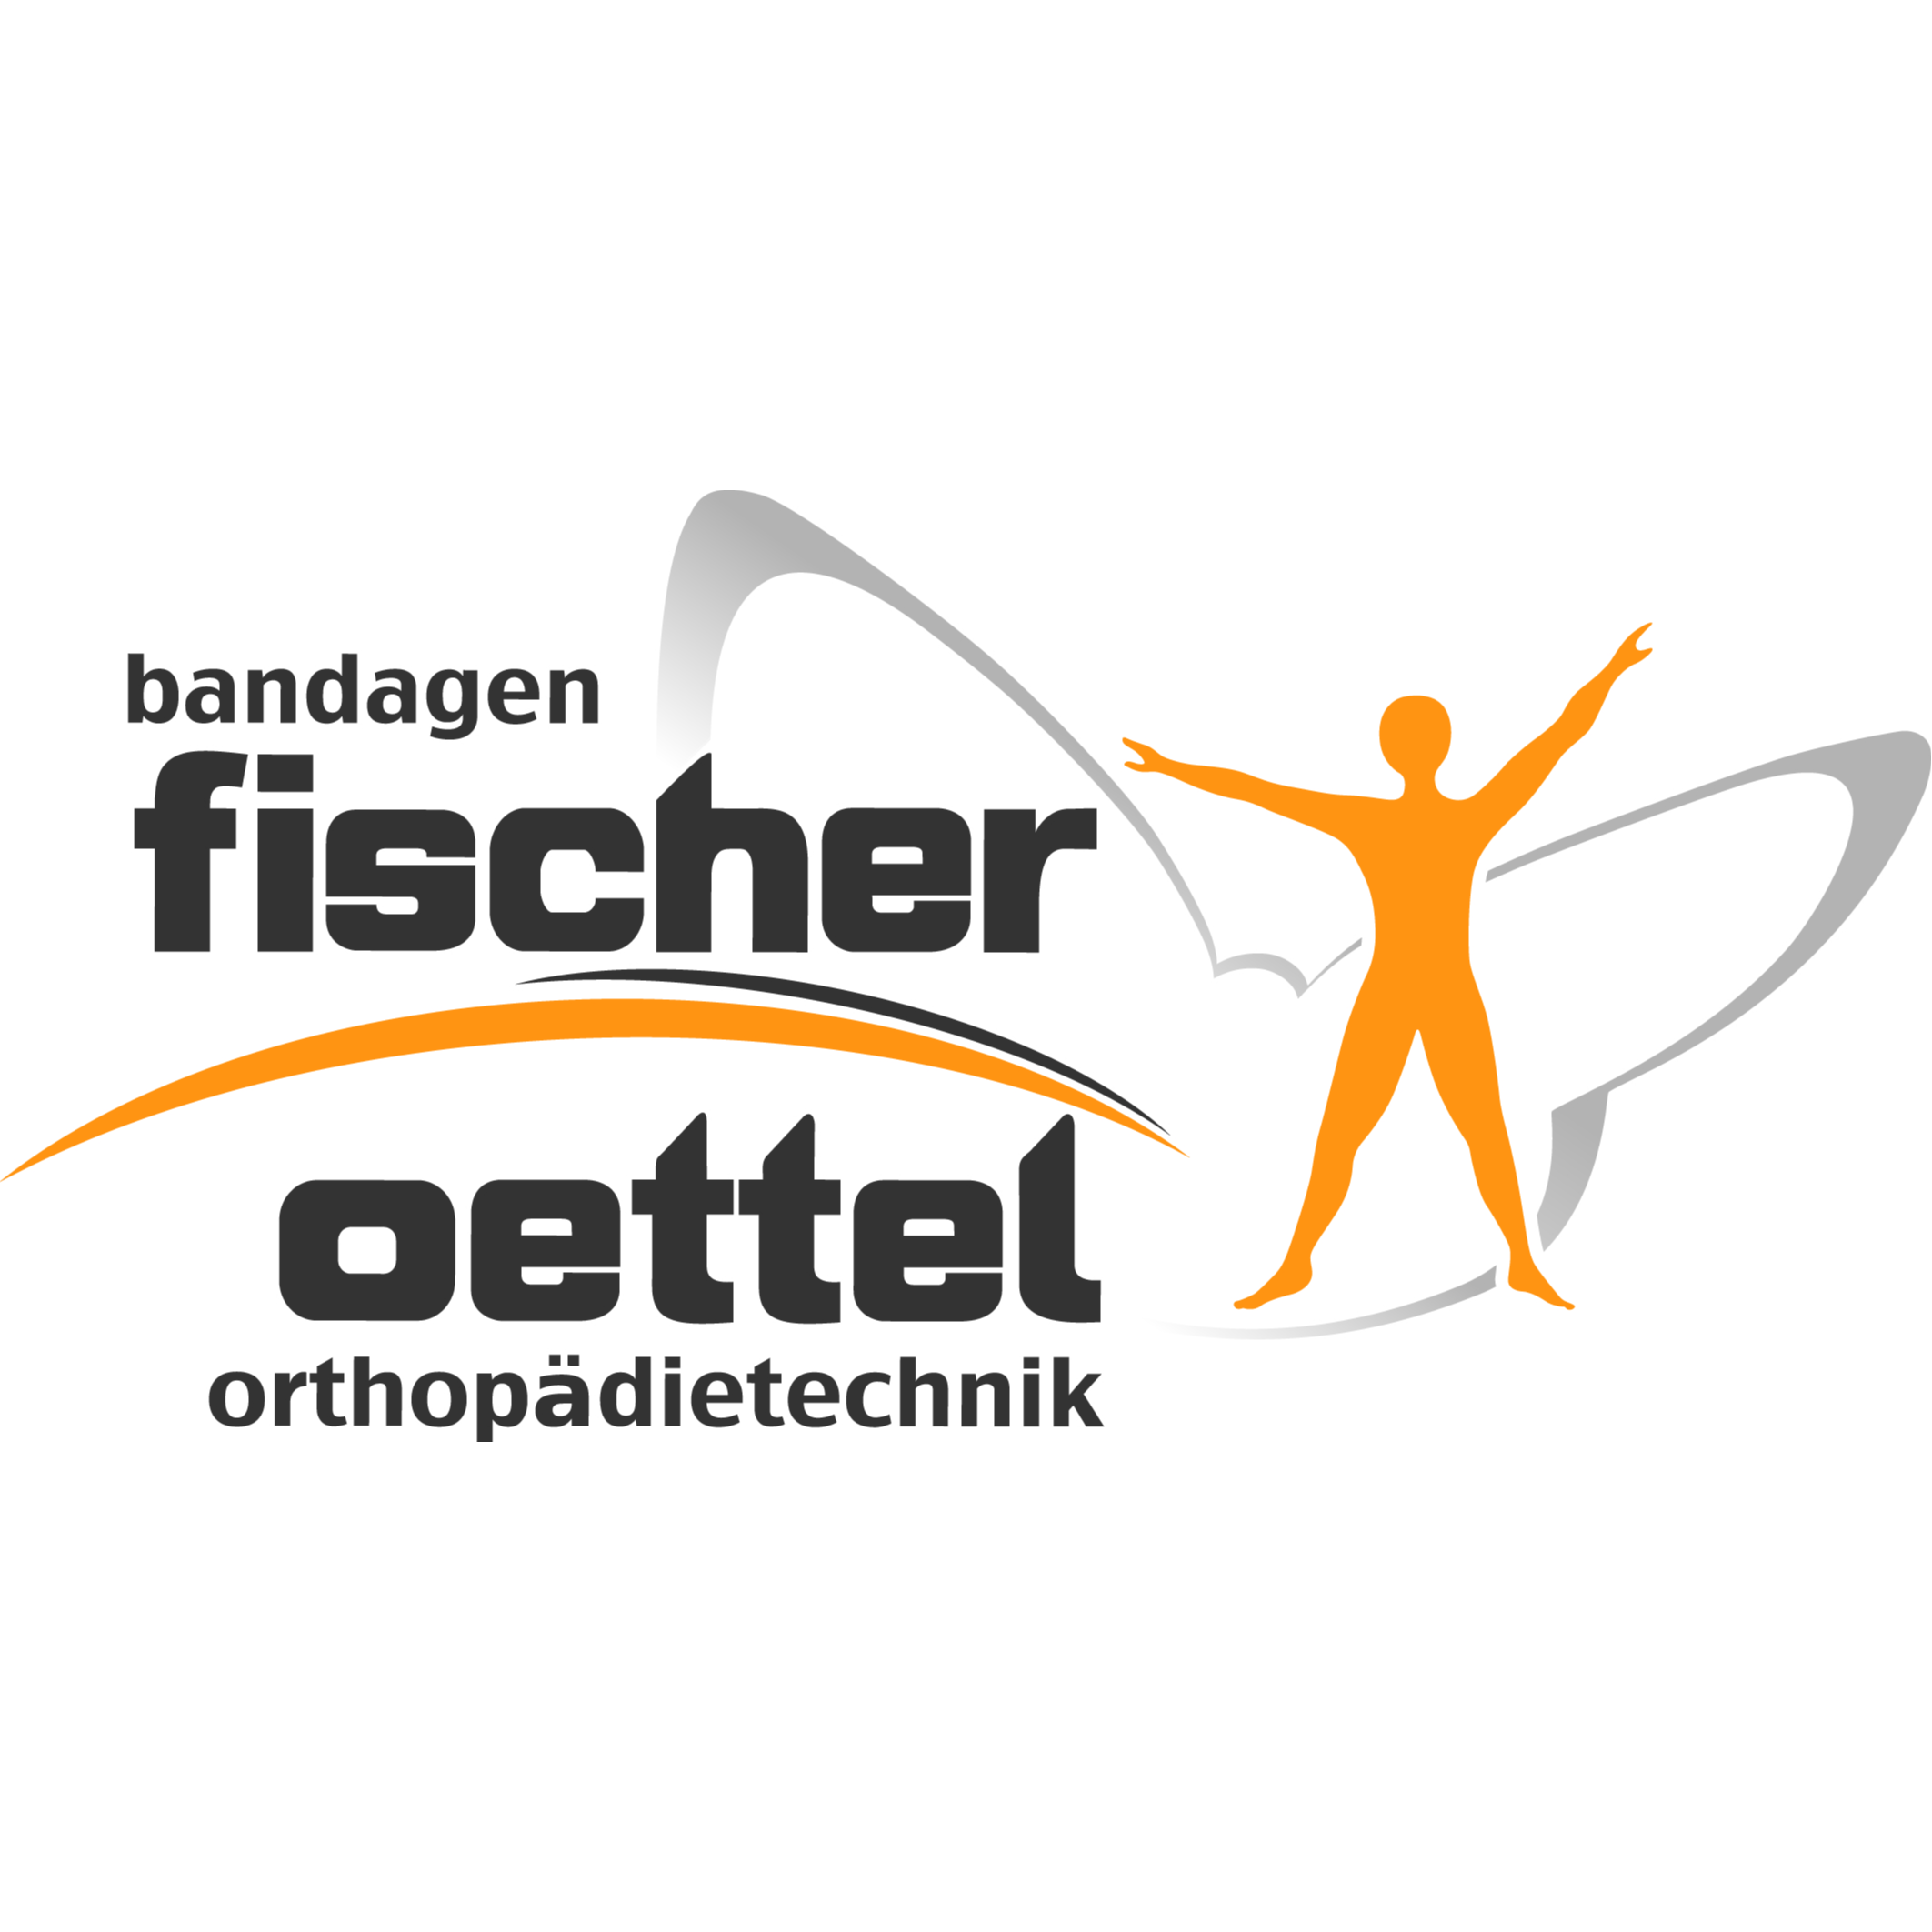 Bandagen Fischer Oettel Orthopädietechnik in Klingenthal in Sachsen - Logo